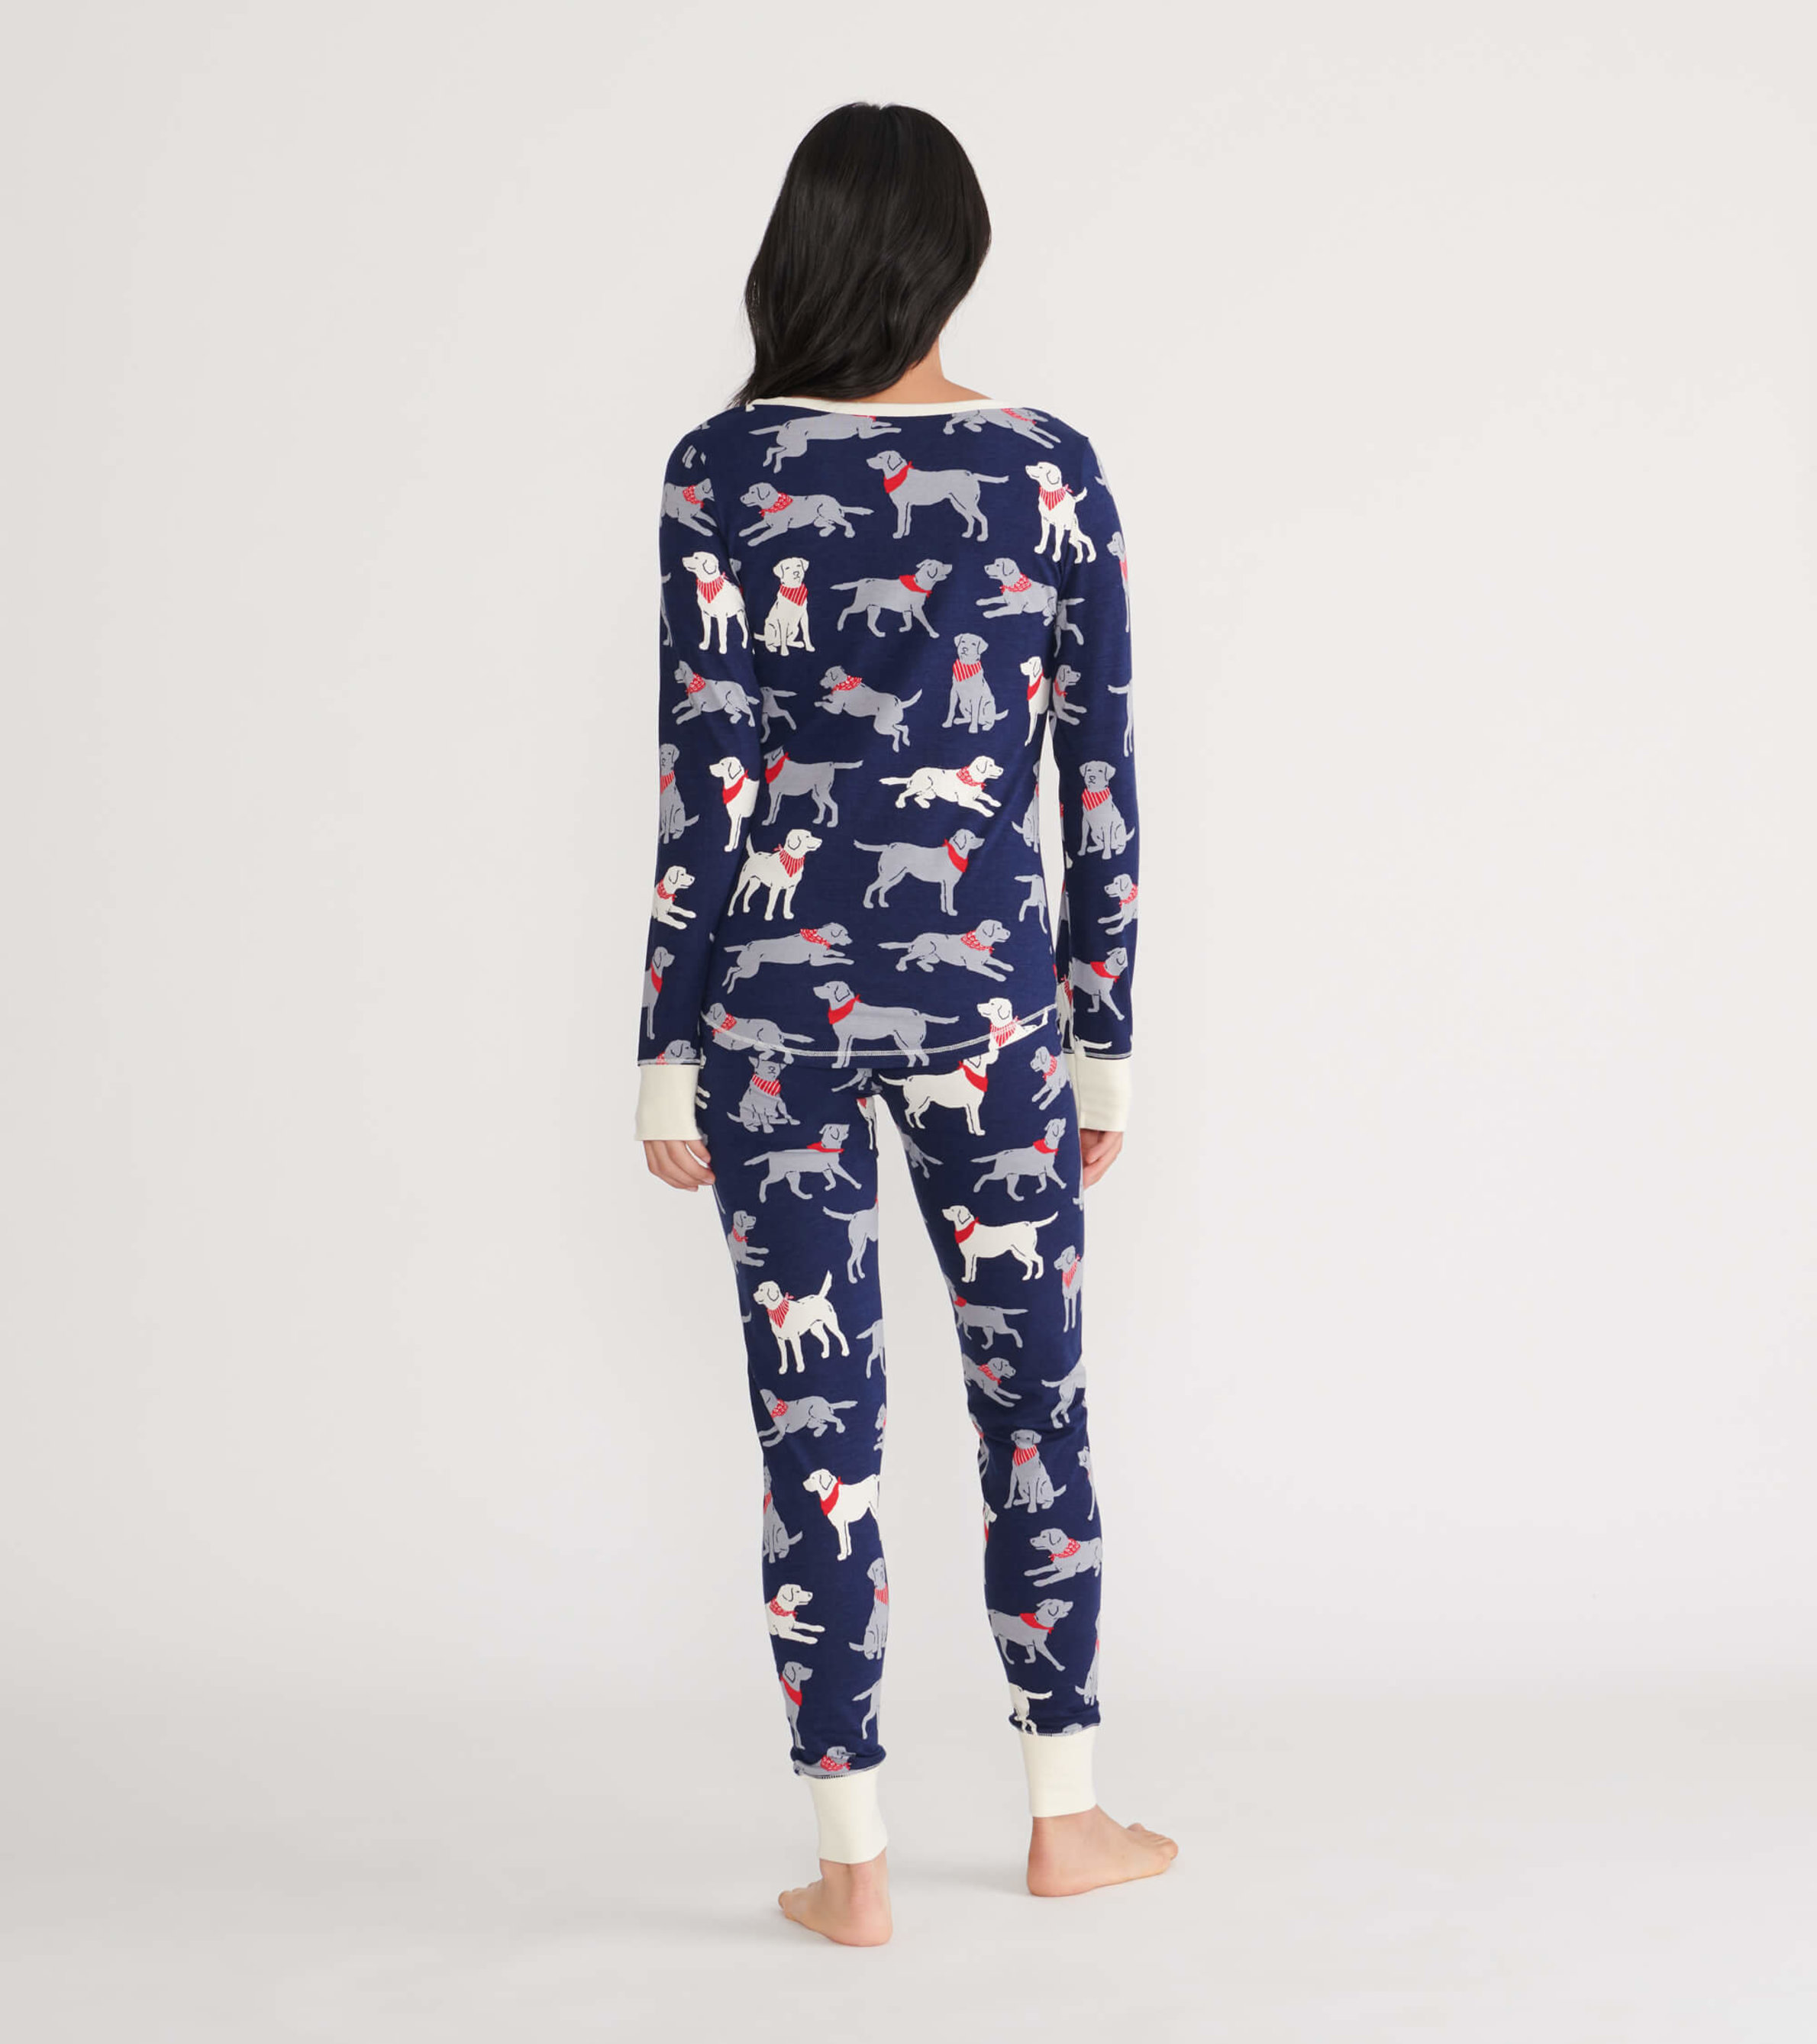 Lisingtool Pajamas for Women Set Women's Double Pocket 3D Ear